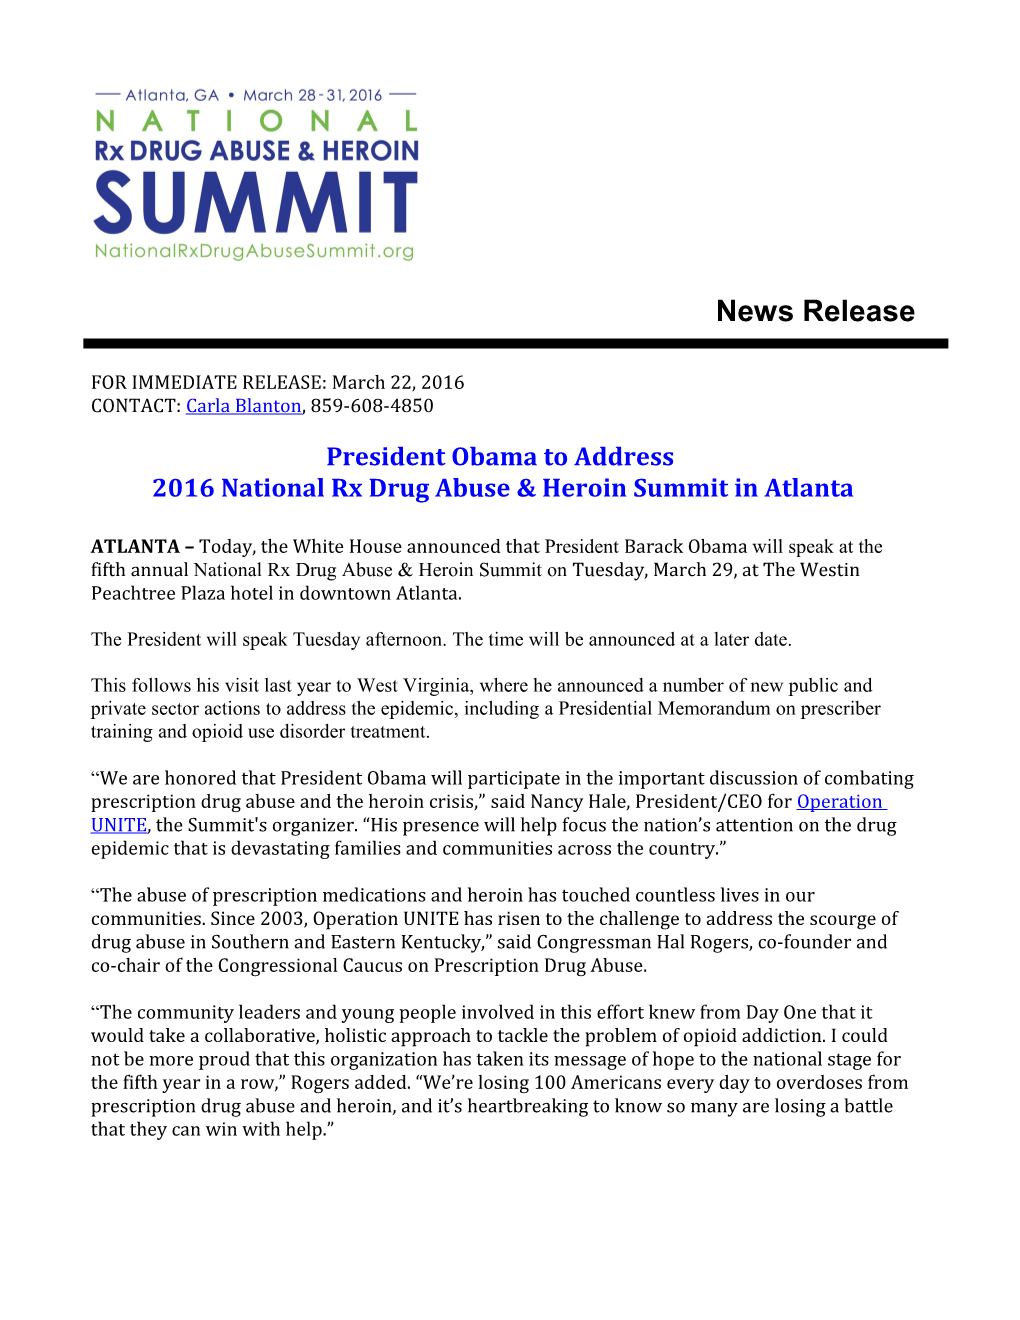 2016 National Rx Drug Abuse & Heroin Summit in Atlanta